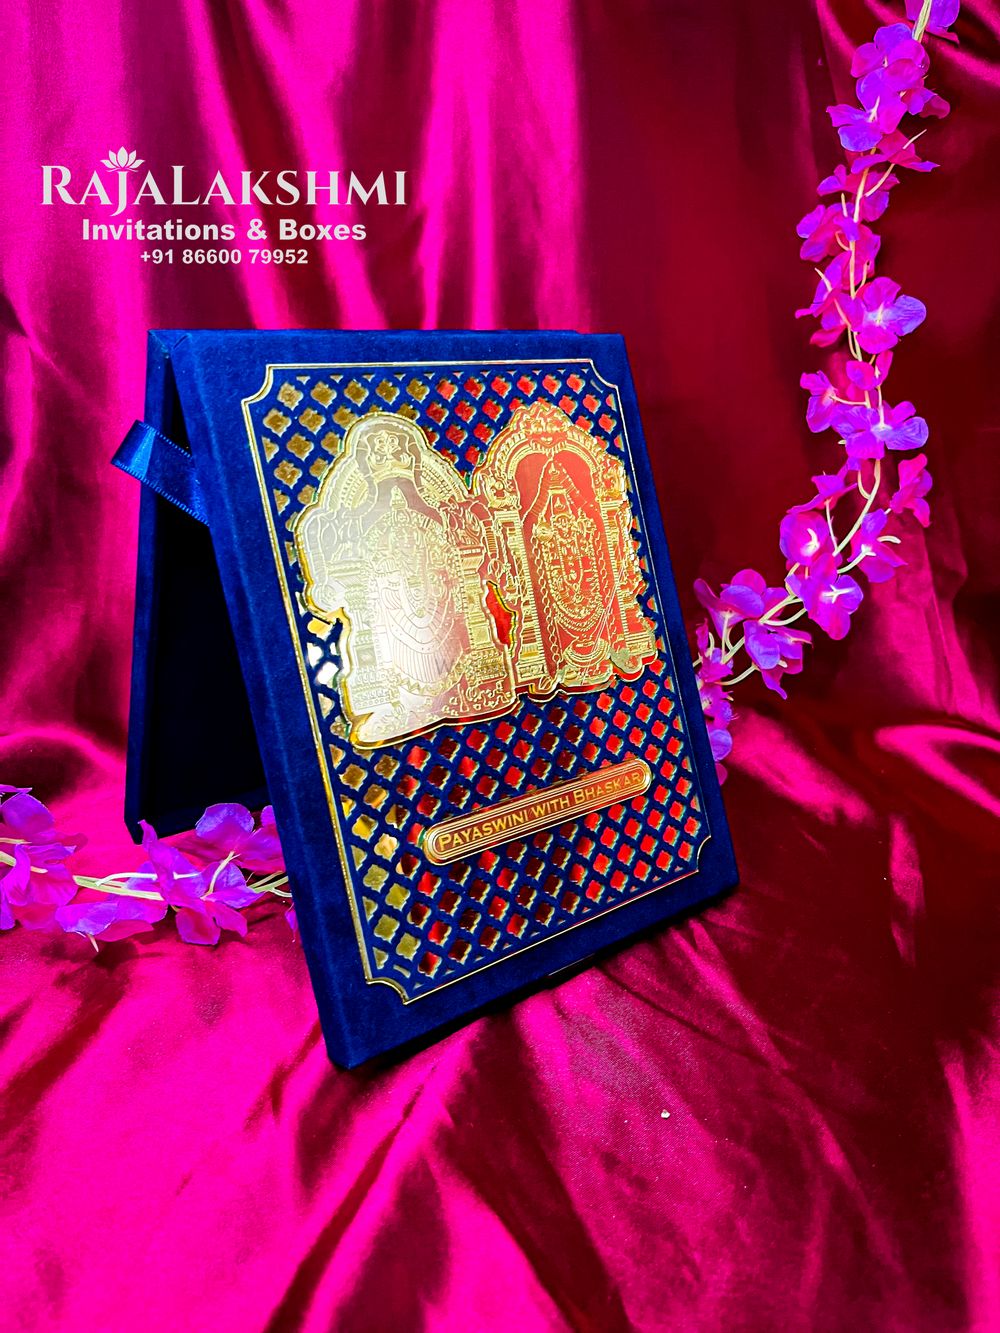 Photo From Wooden/MDF - By Sri Raja Lakshmi Wedding Cards